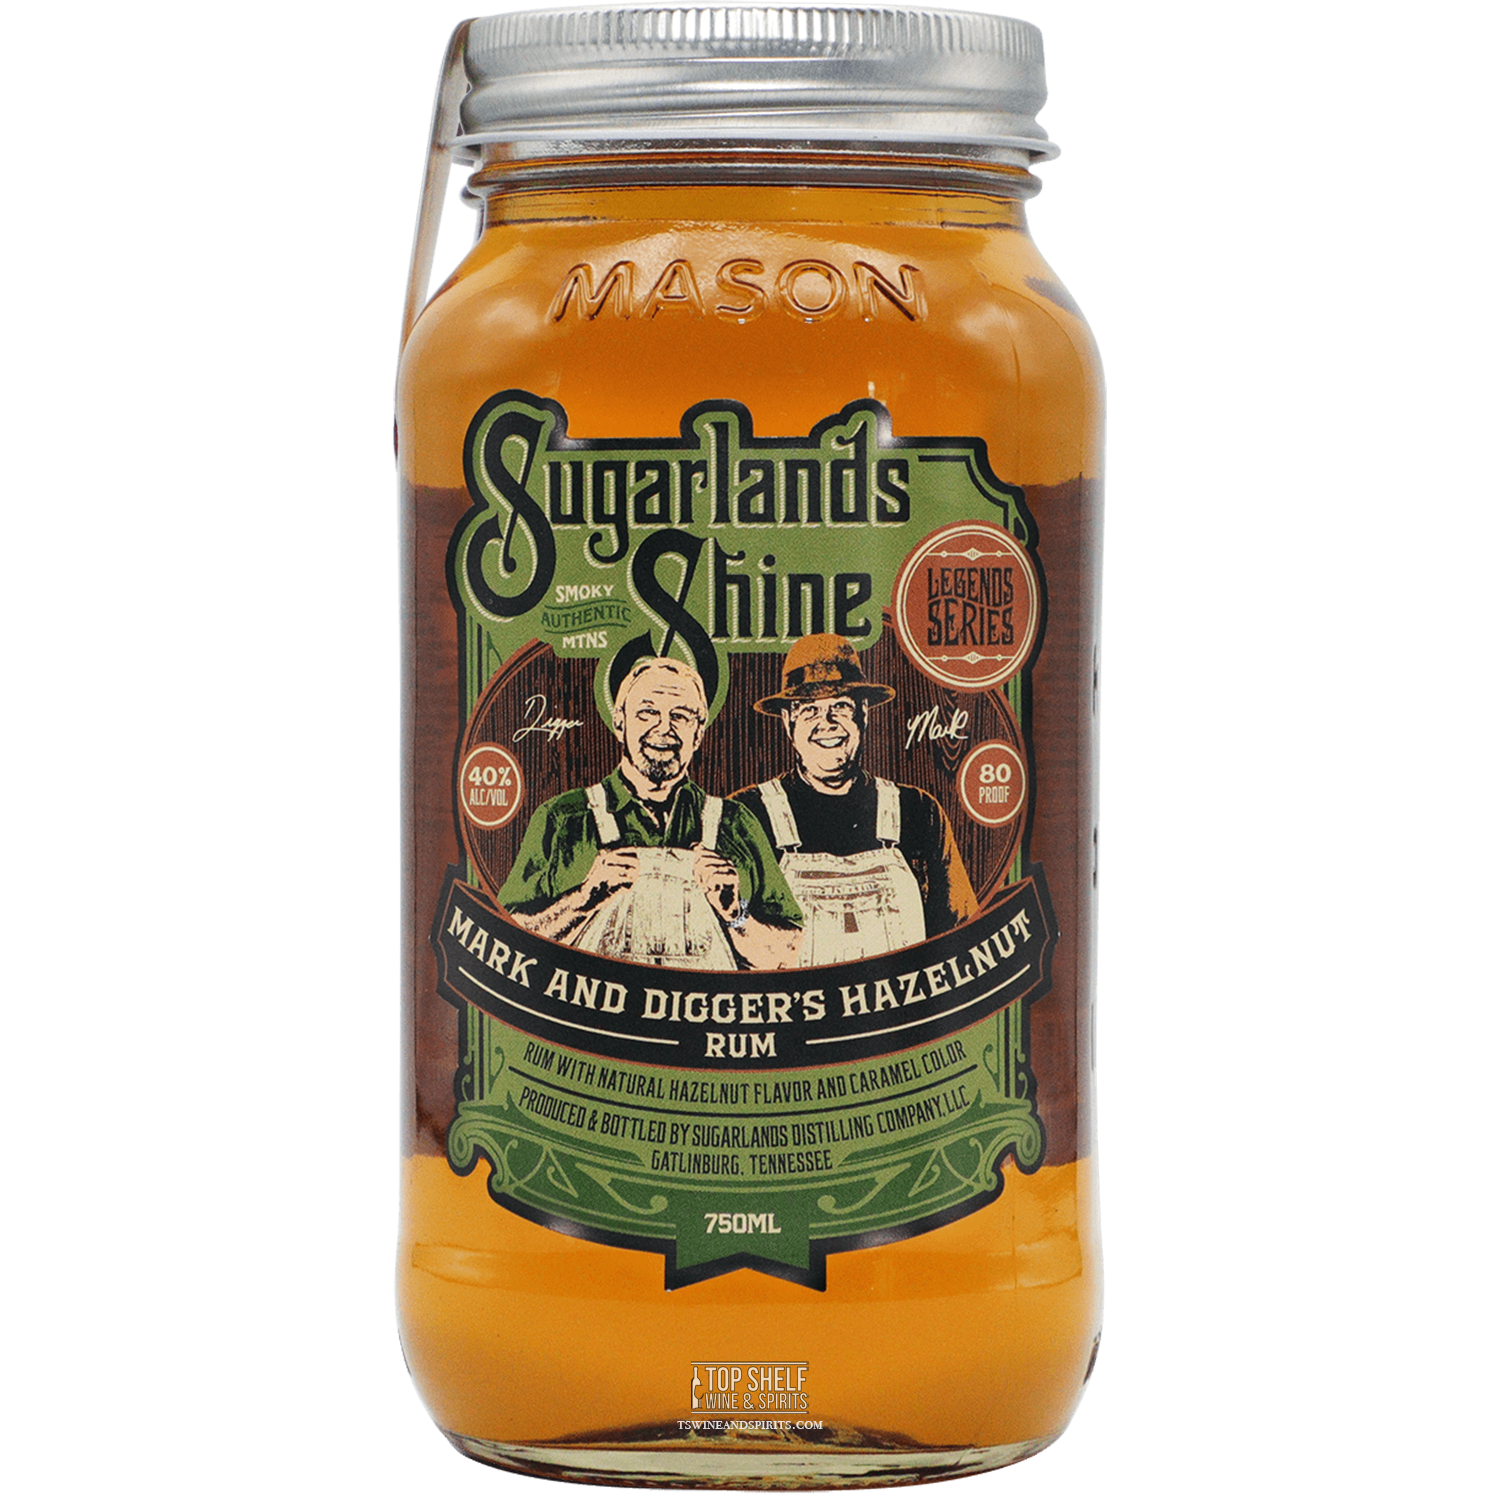 Sugarlands Shine Mark and Digger's Hazelnut Rum